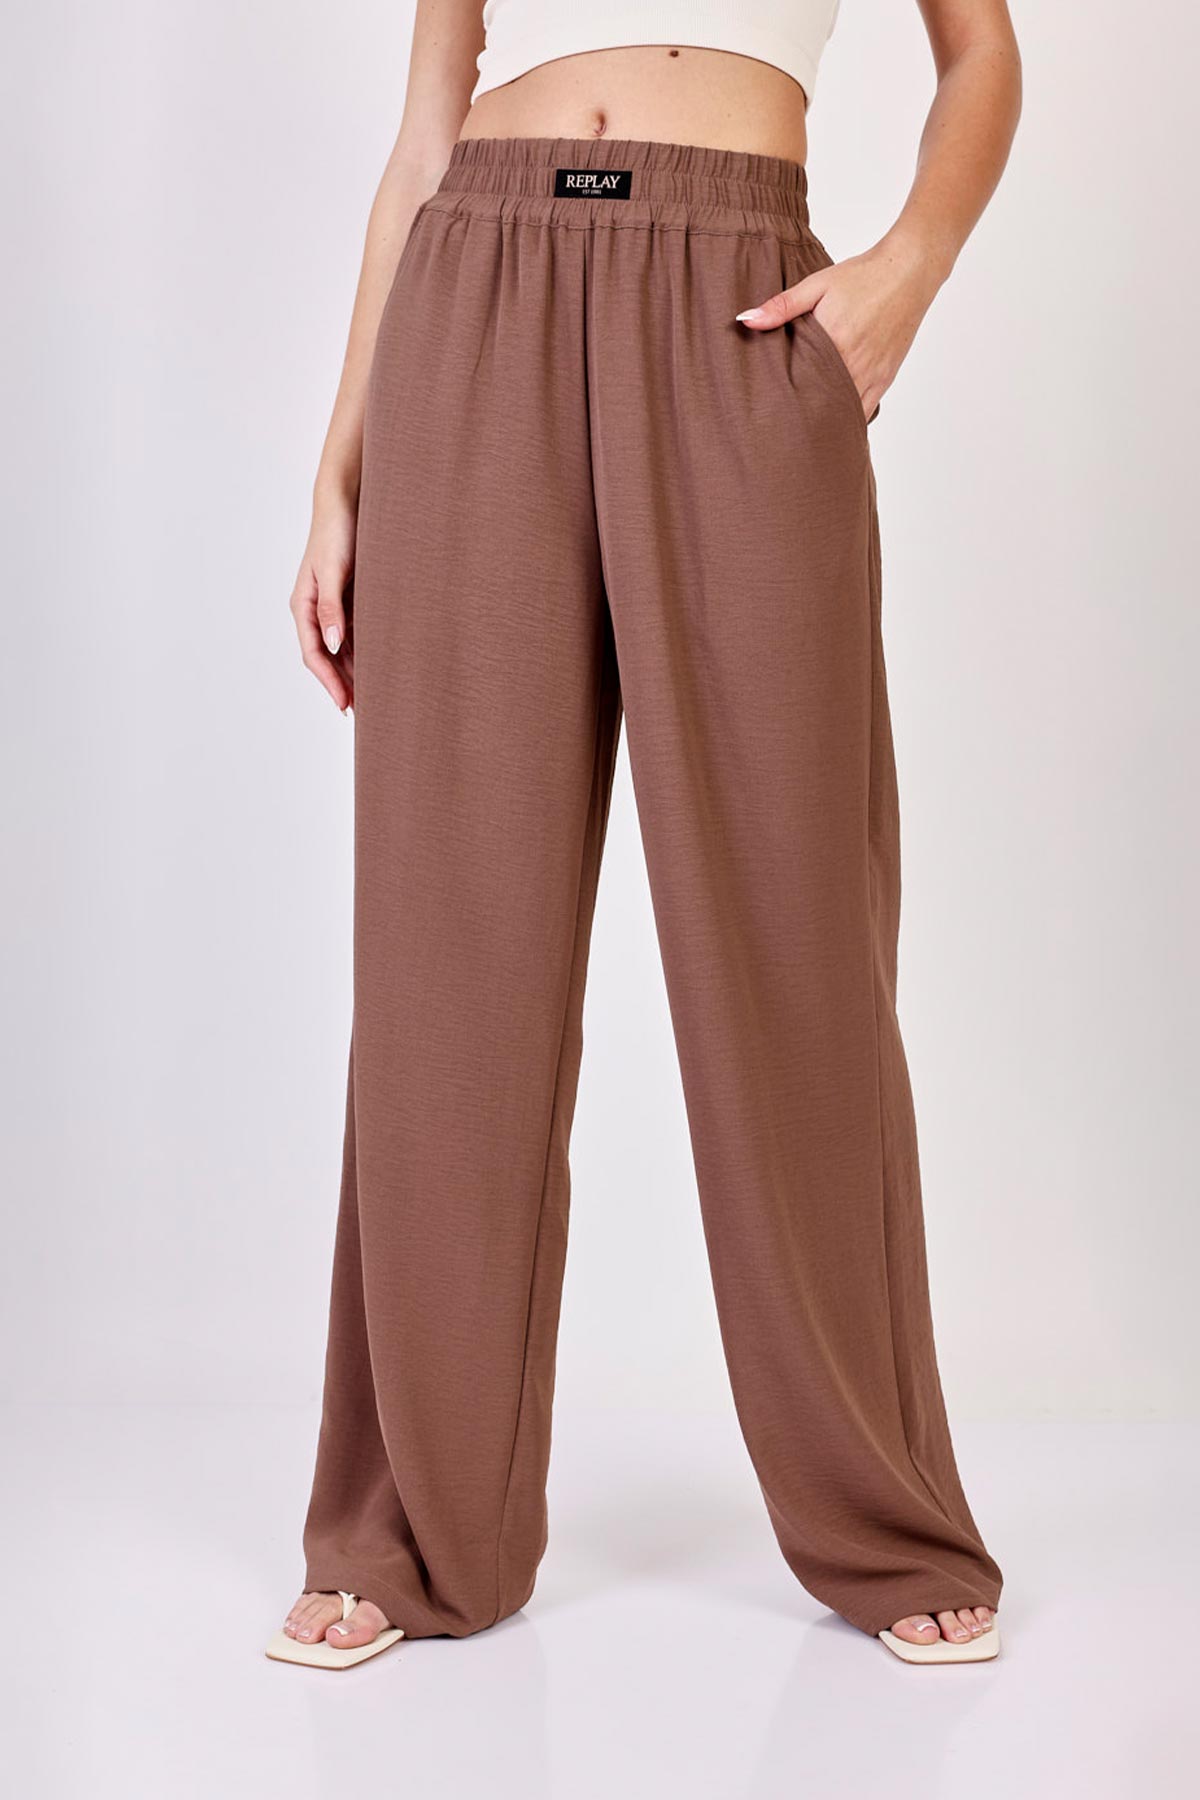 Replay מכנסיים ארוכים Current בצבע קאמל לנשים-Replay-XS-נאקו